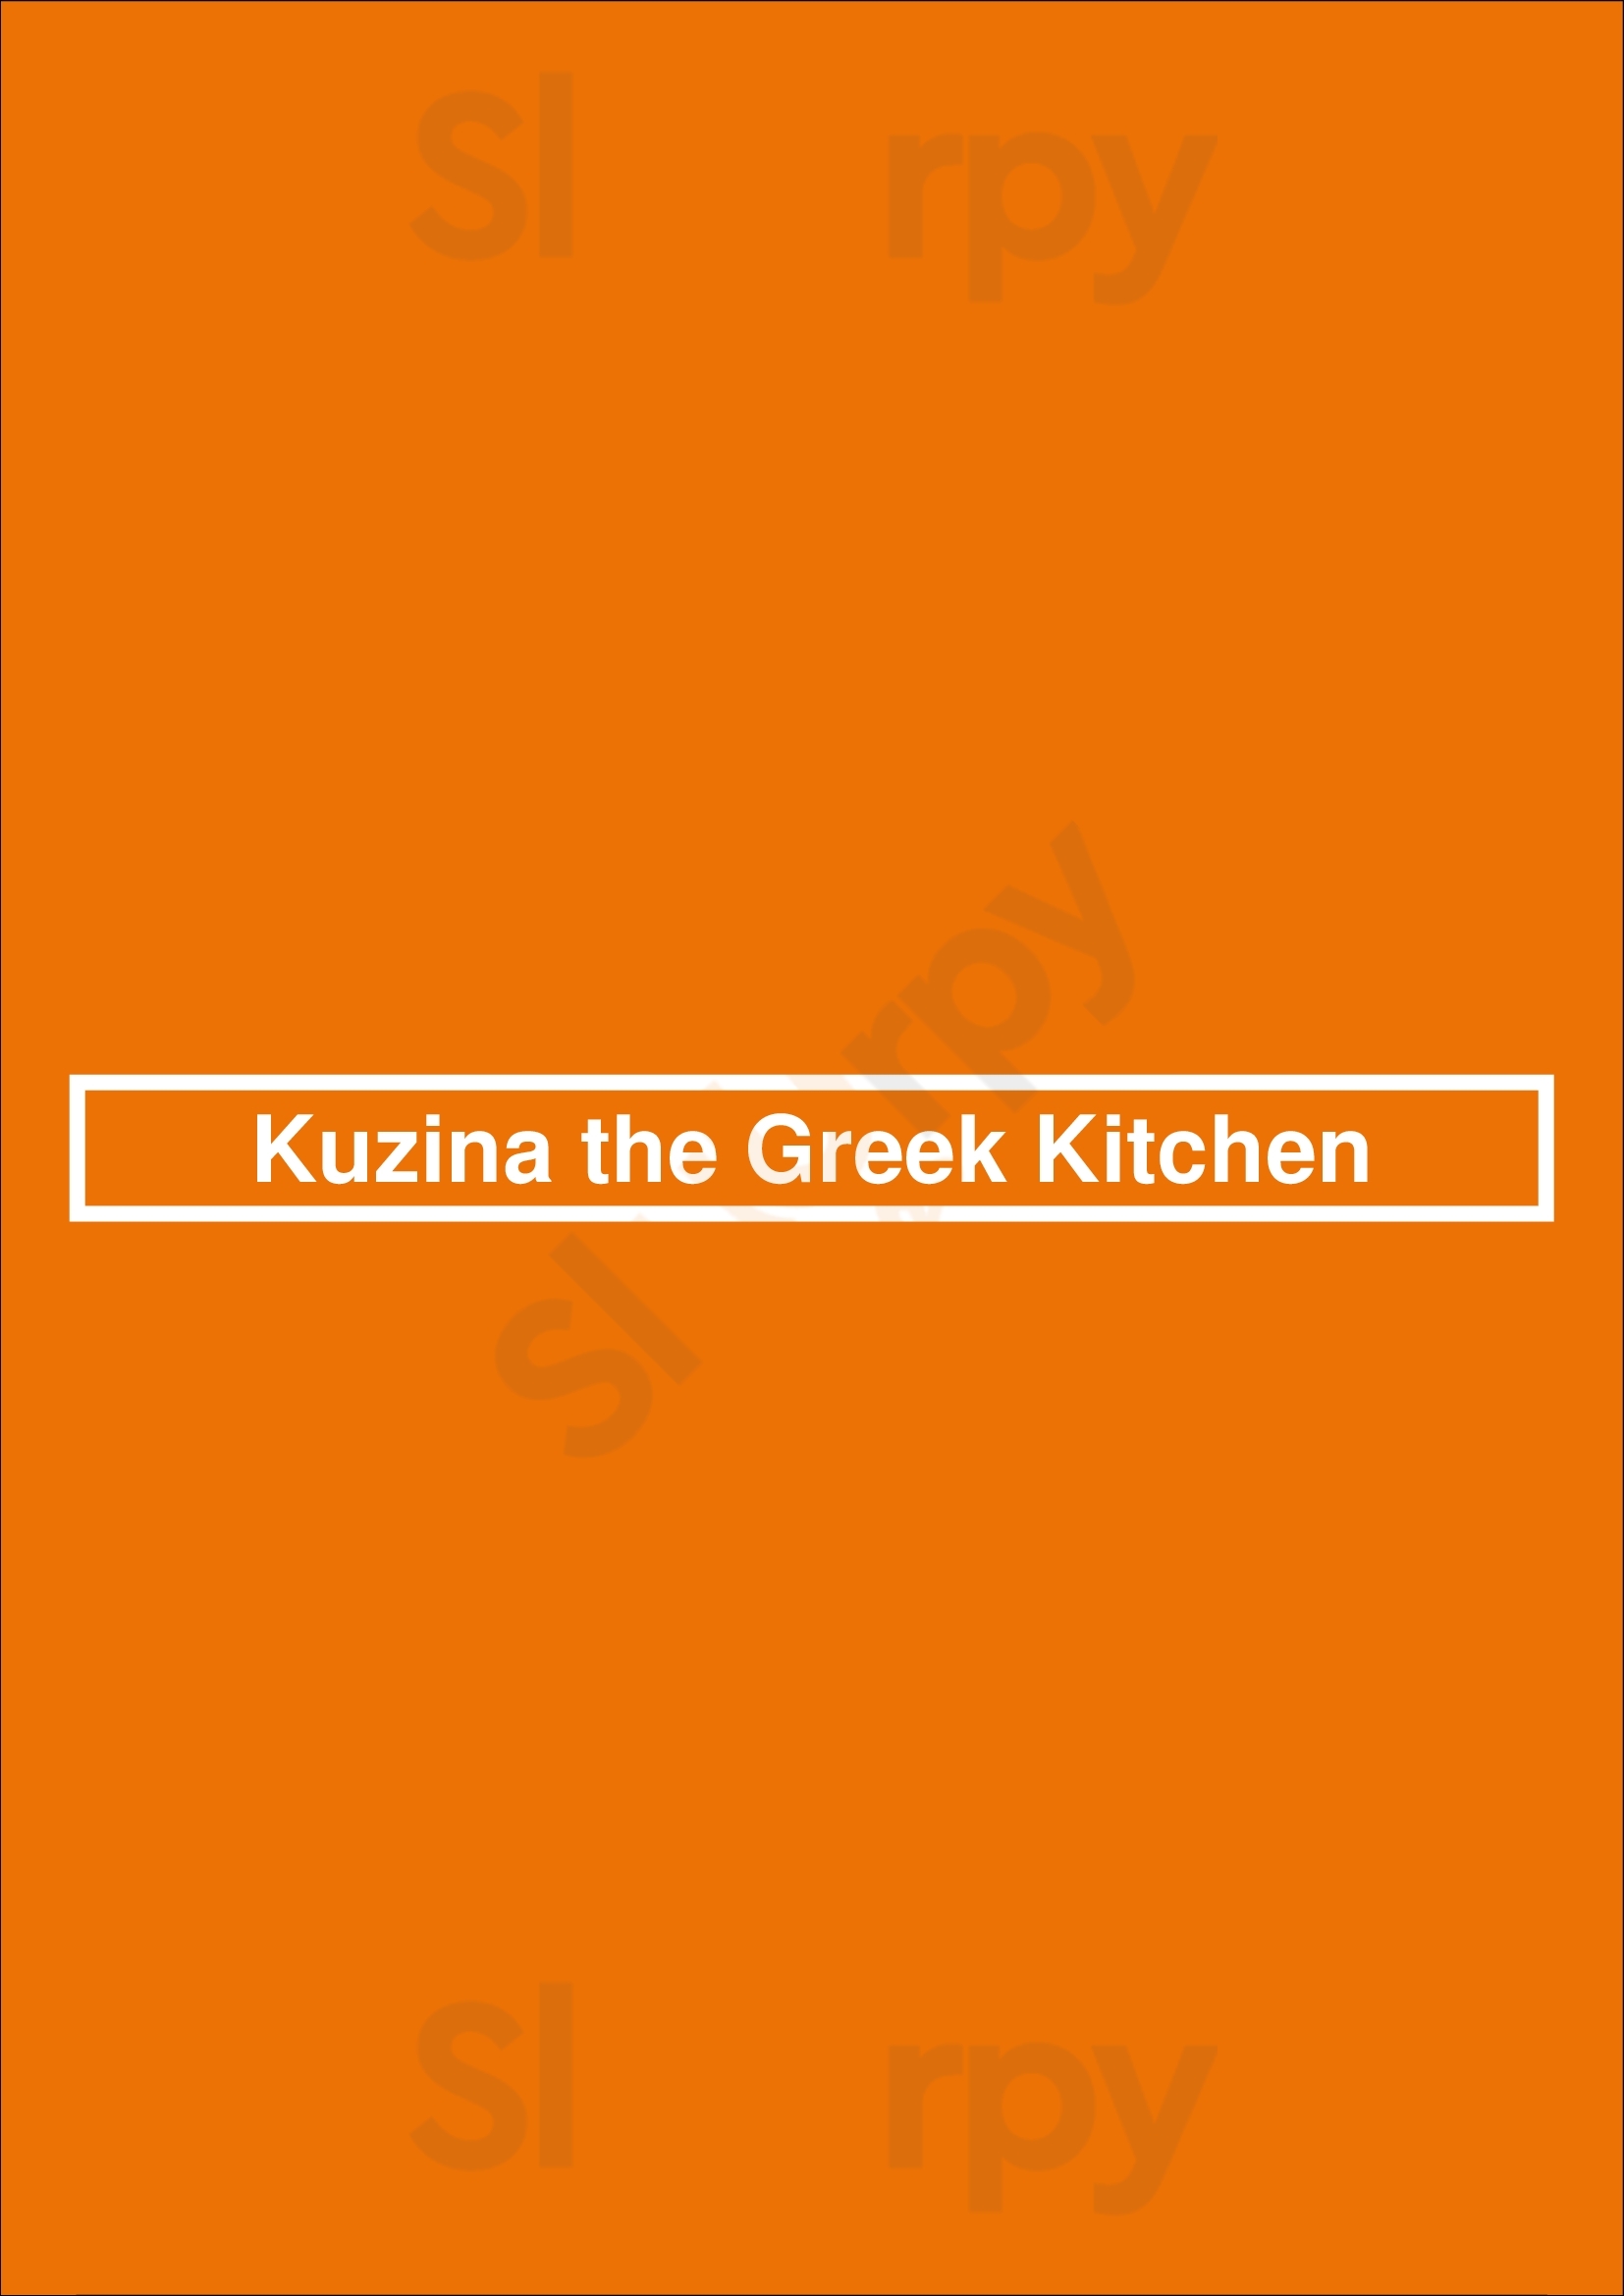 Kuzina The Greek Kitchen Staten Island Menu - 1